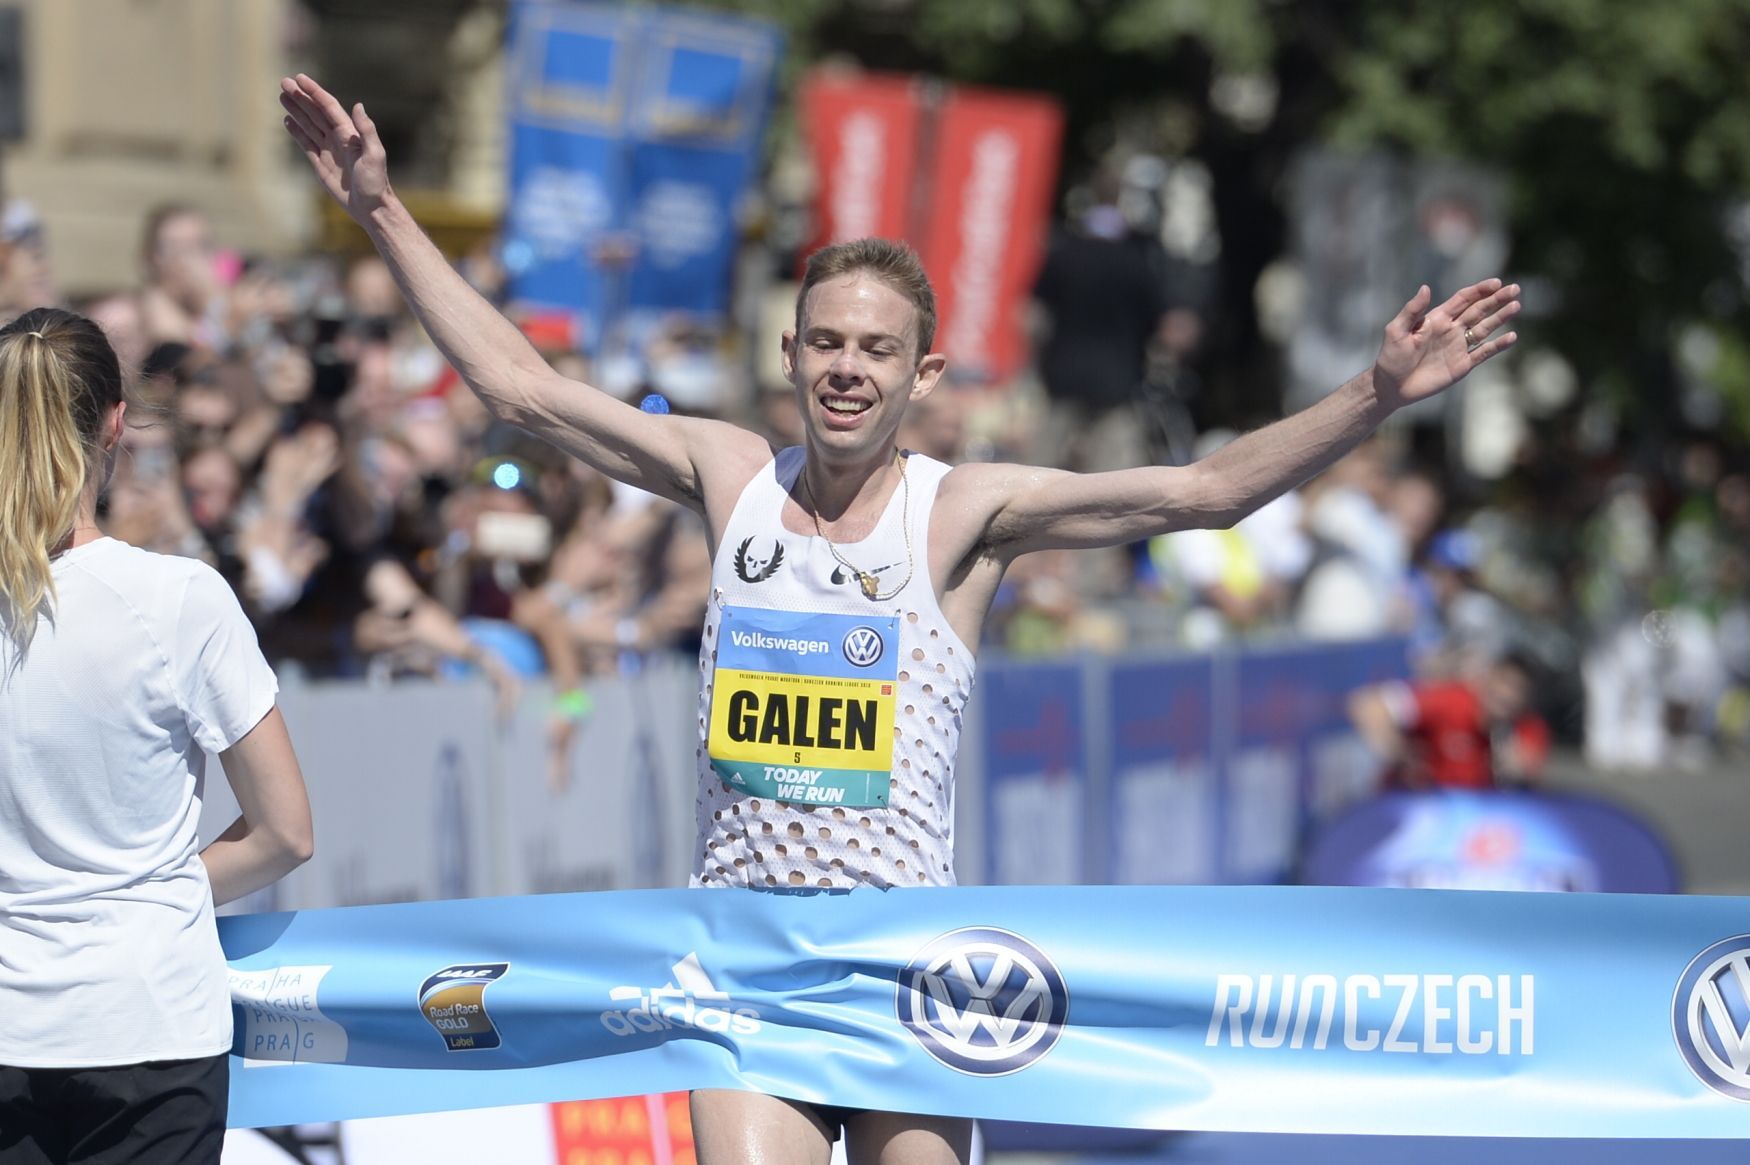 Pražský maraton 2018: Galen Rupp